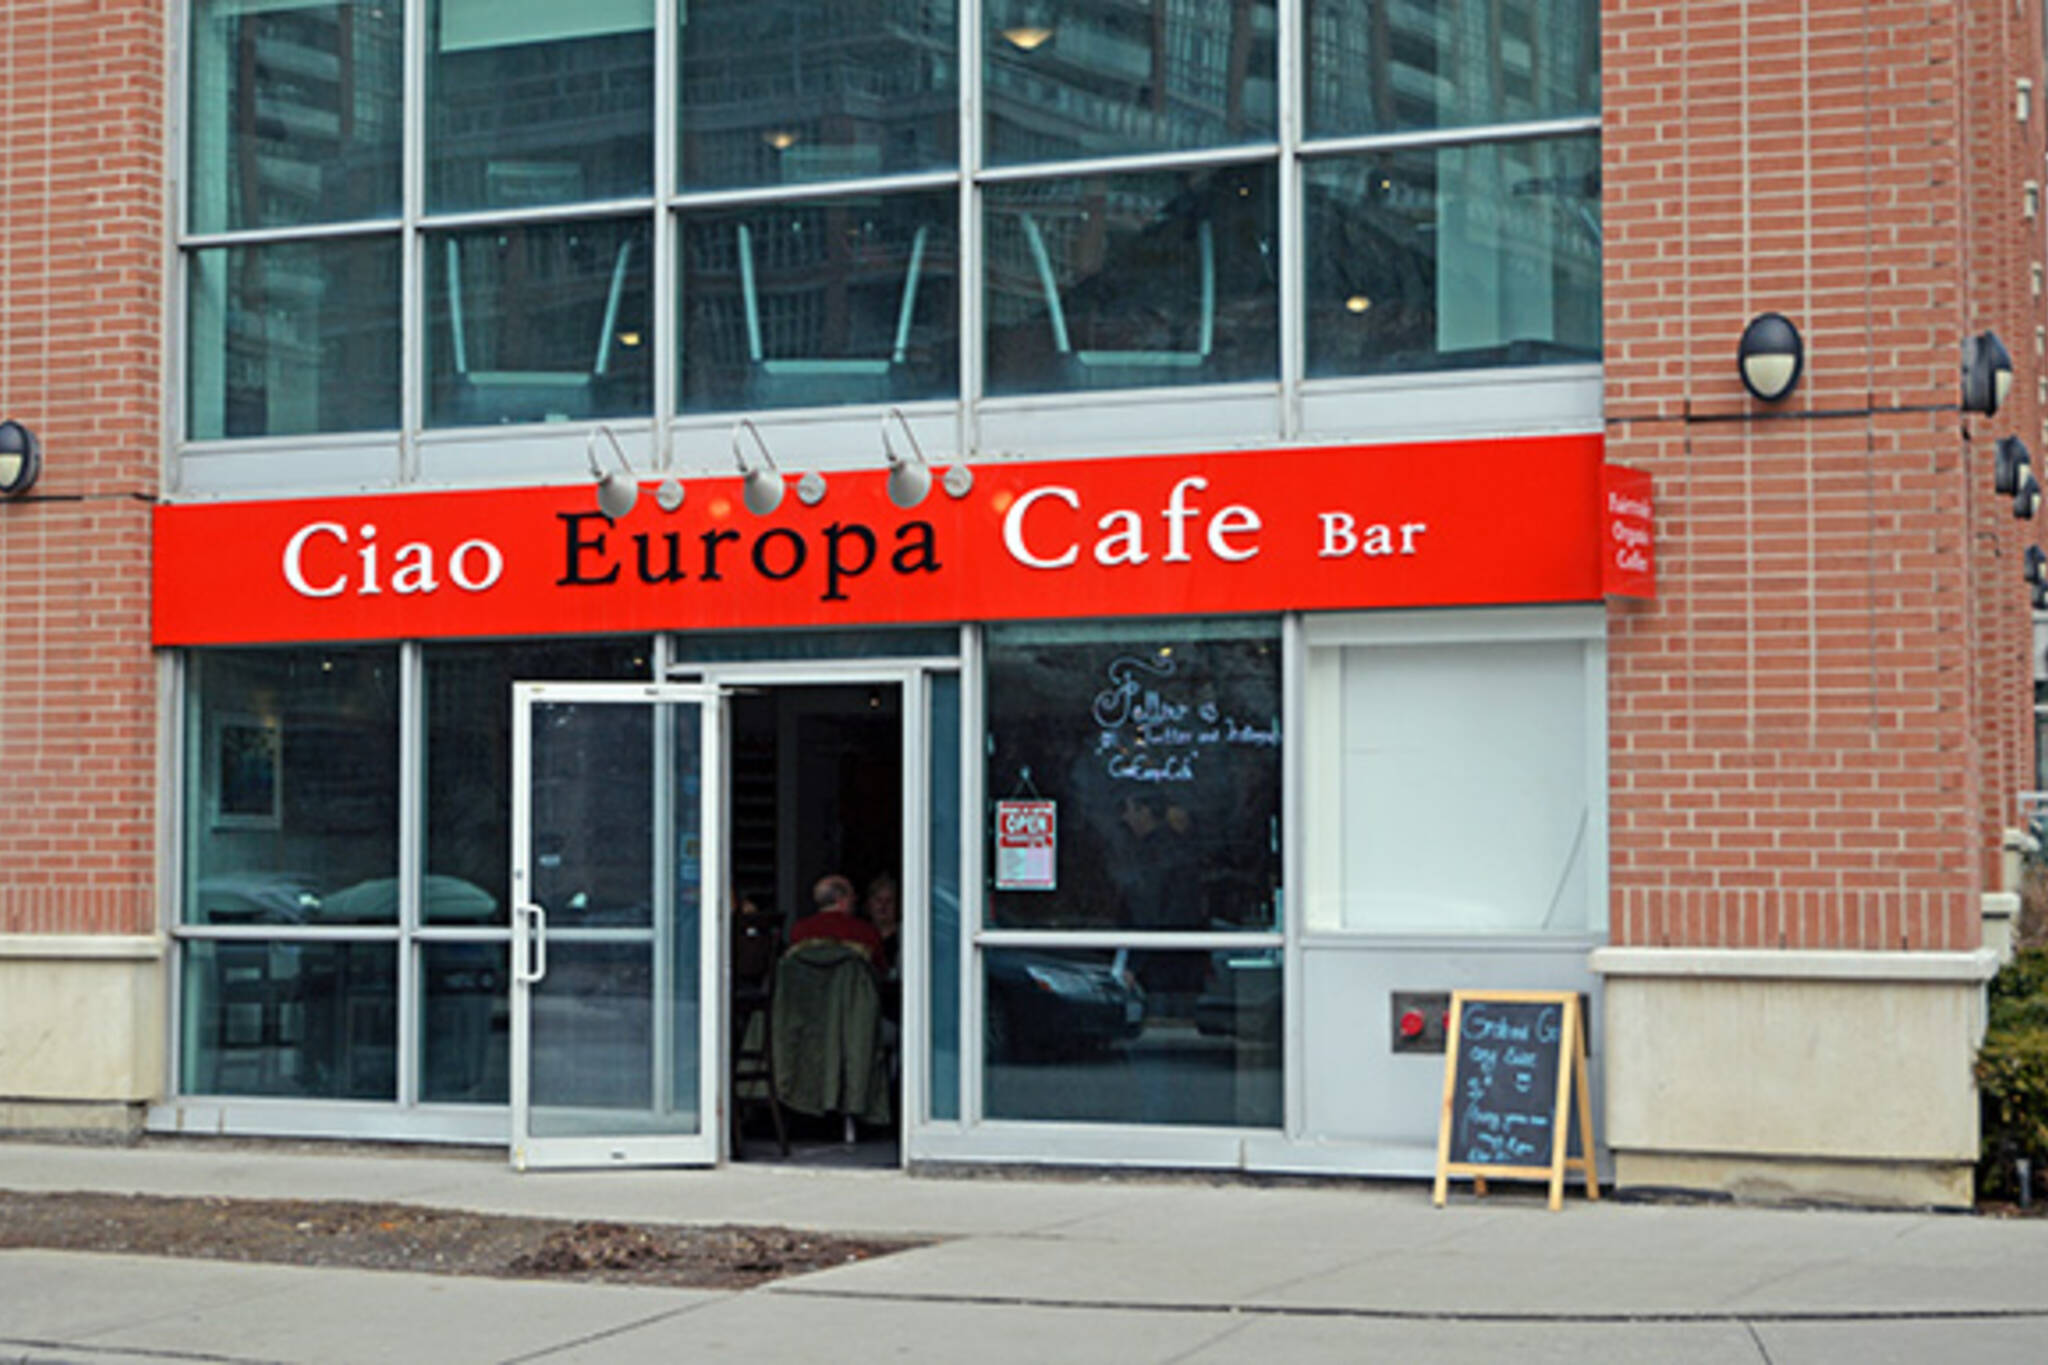 Ciao Europa Cafe